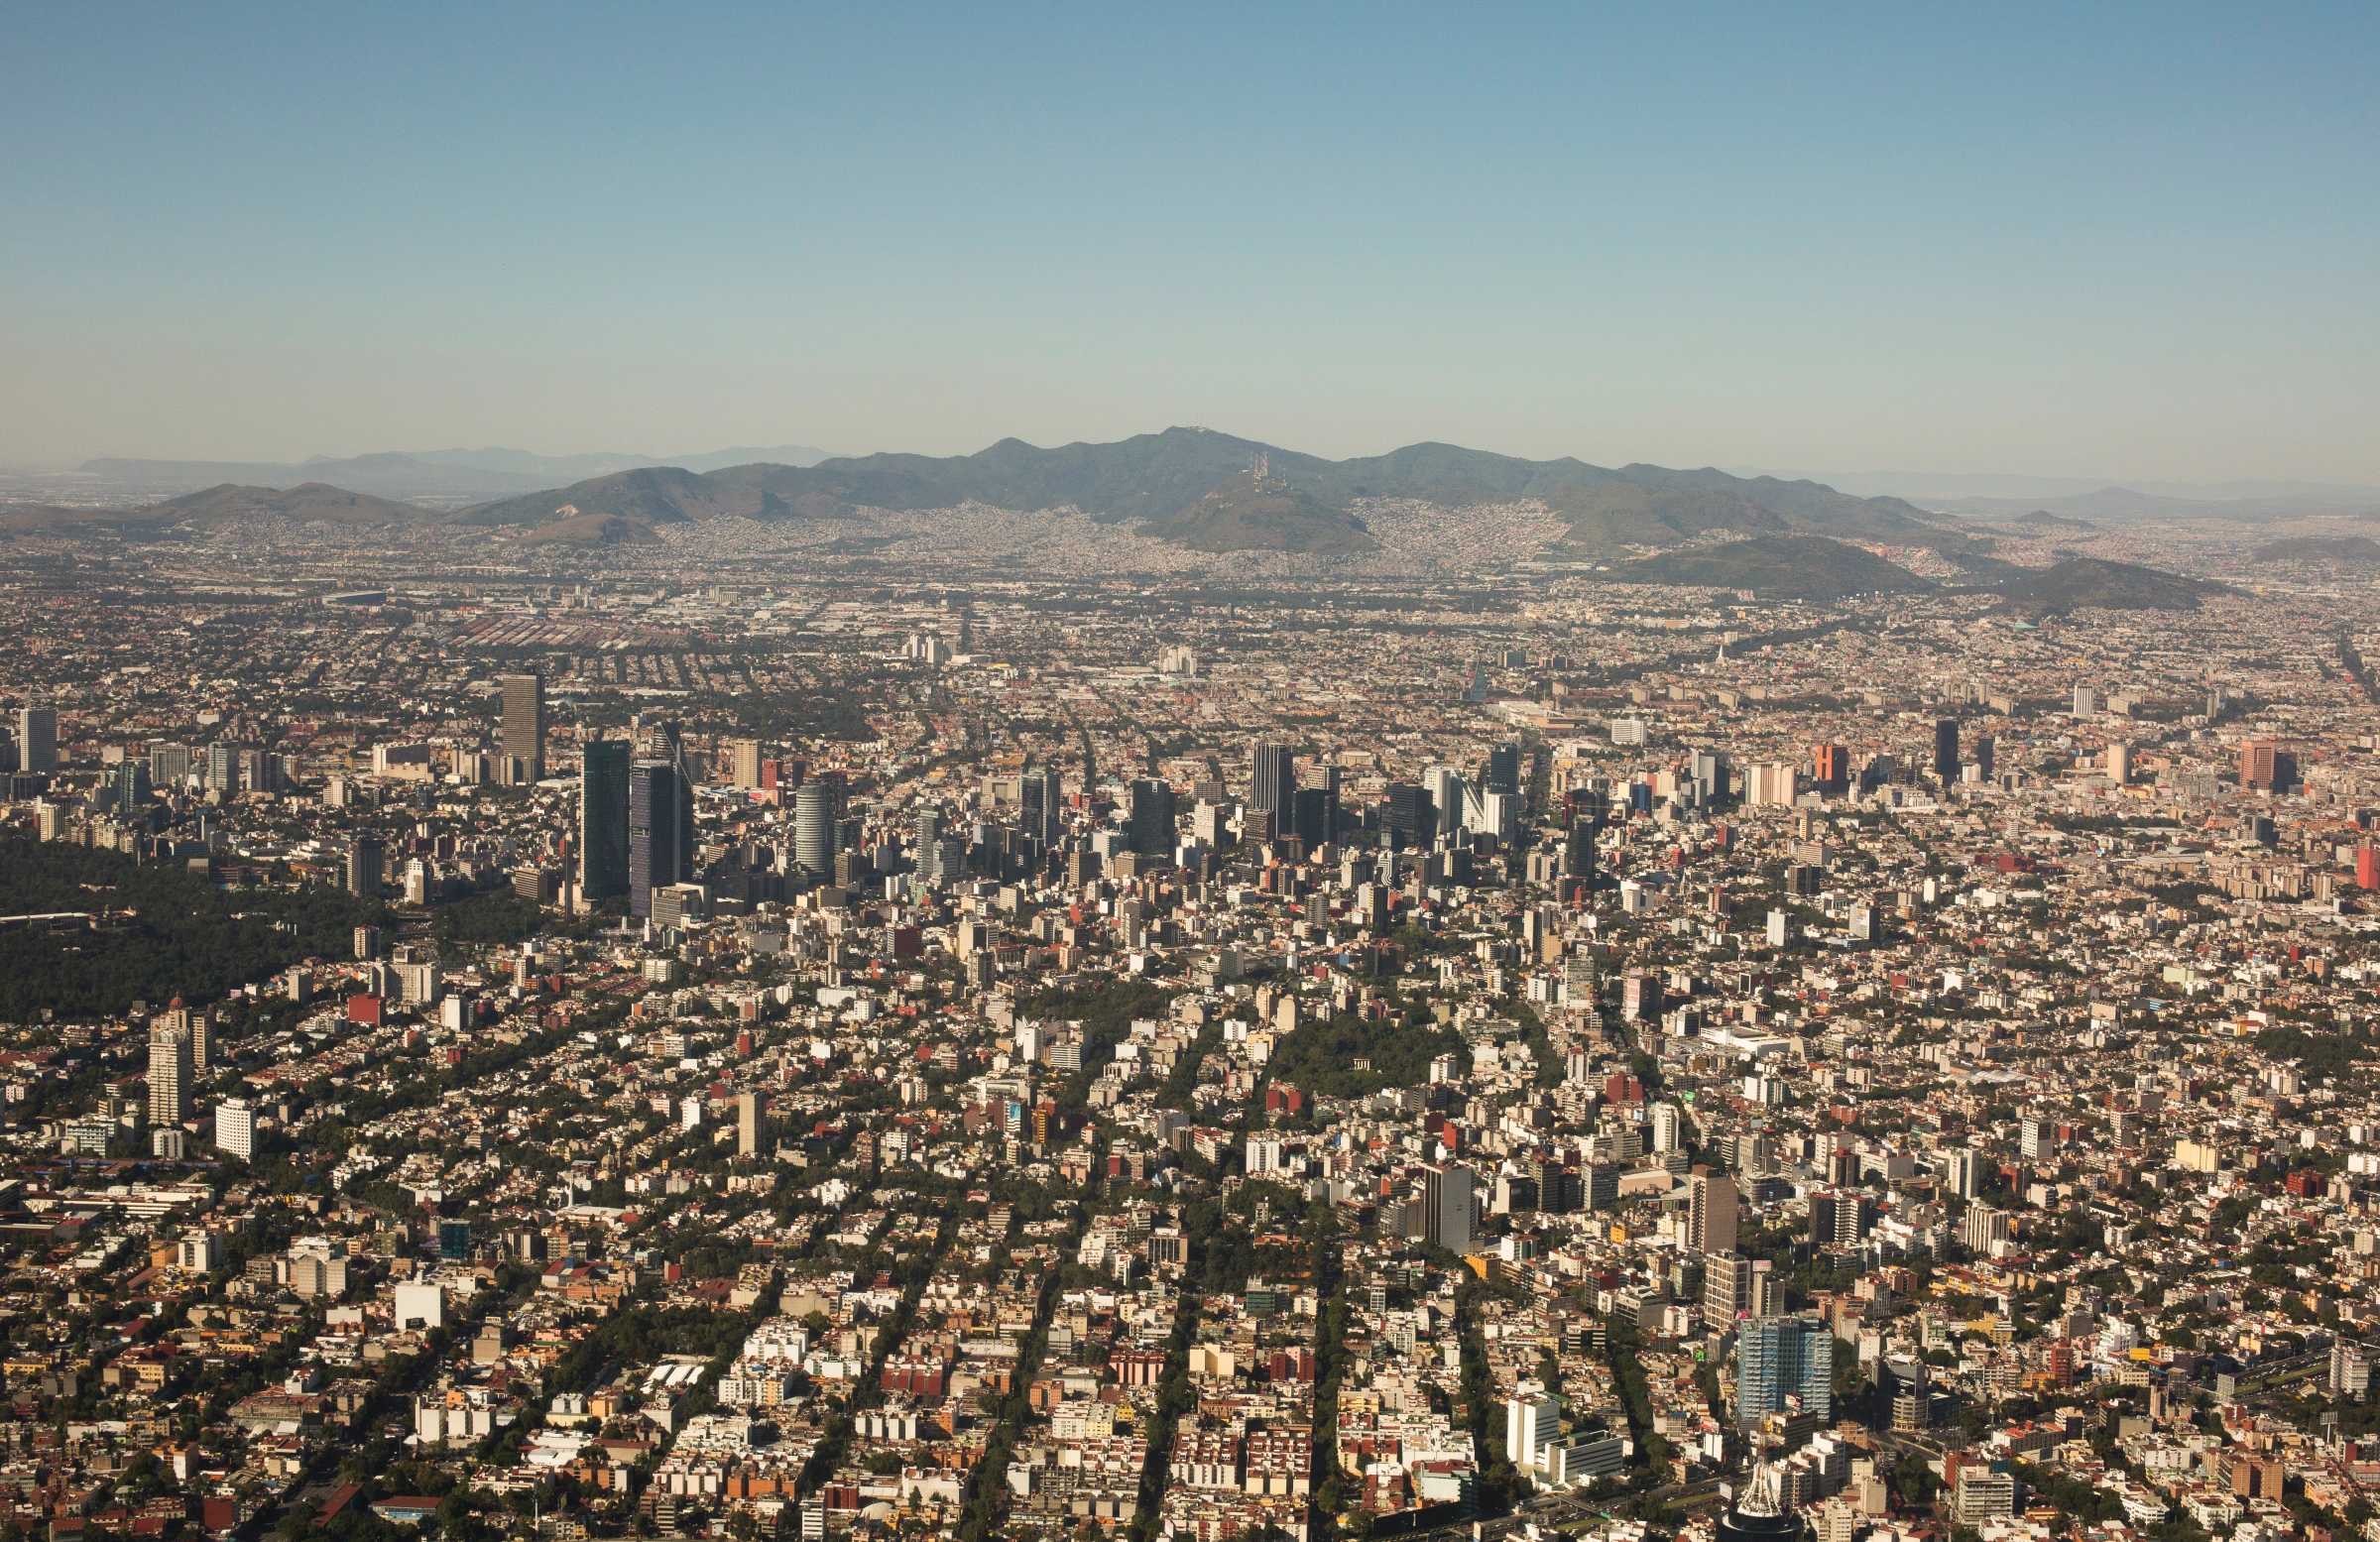 Mexico City - Built on Aztec